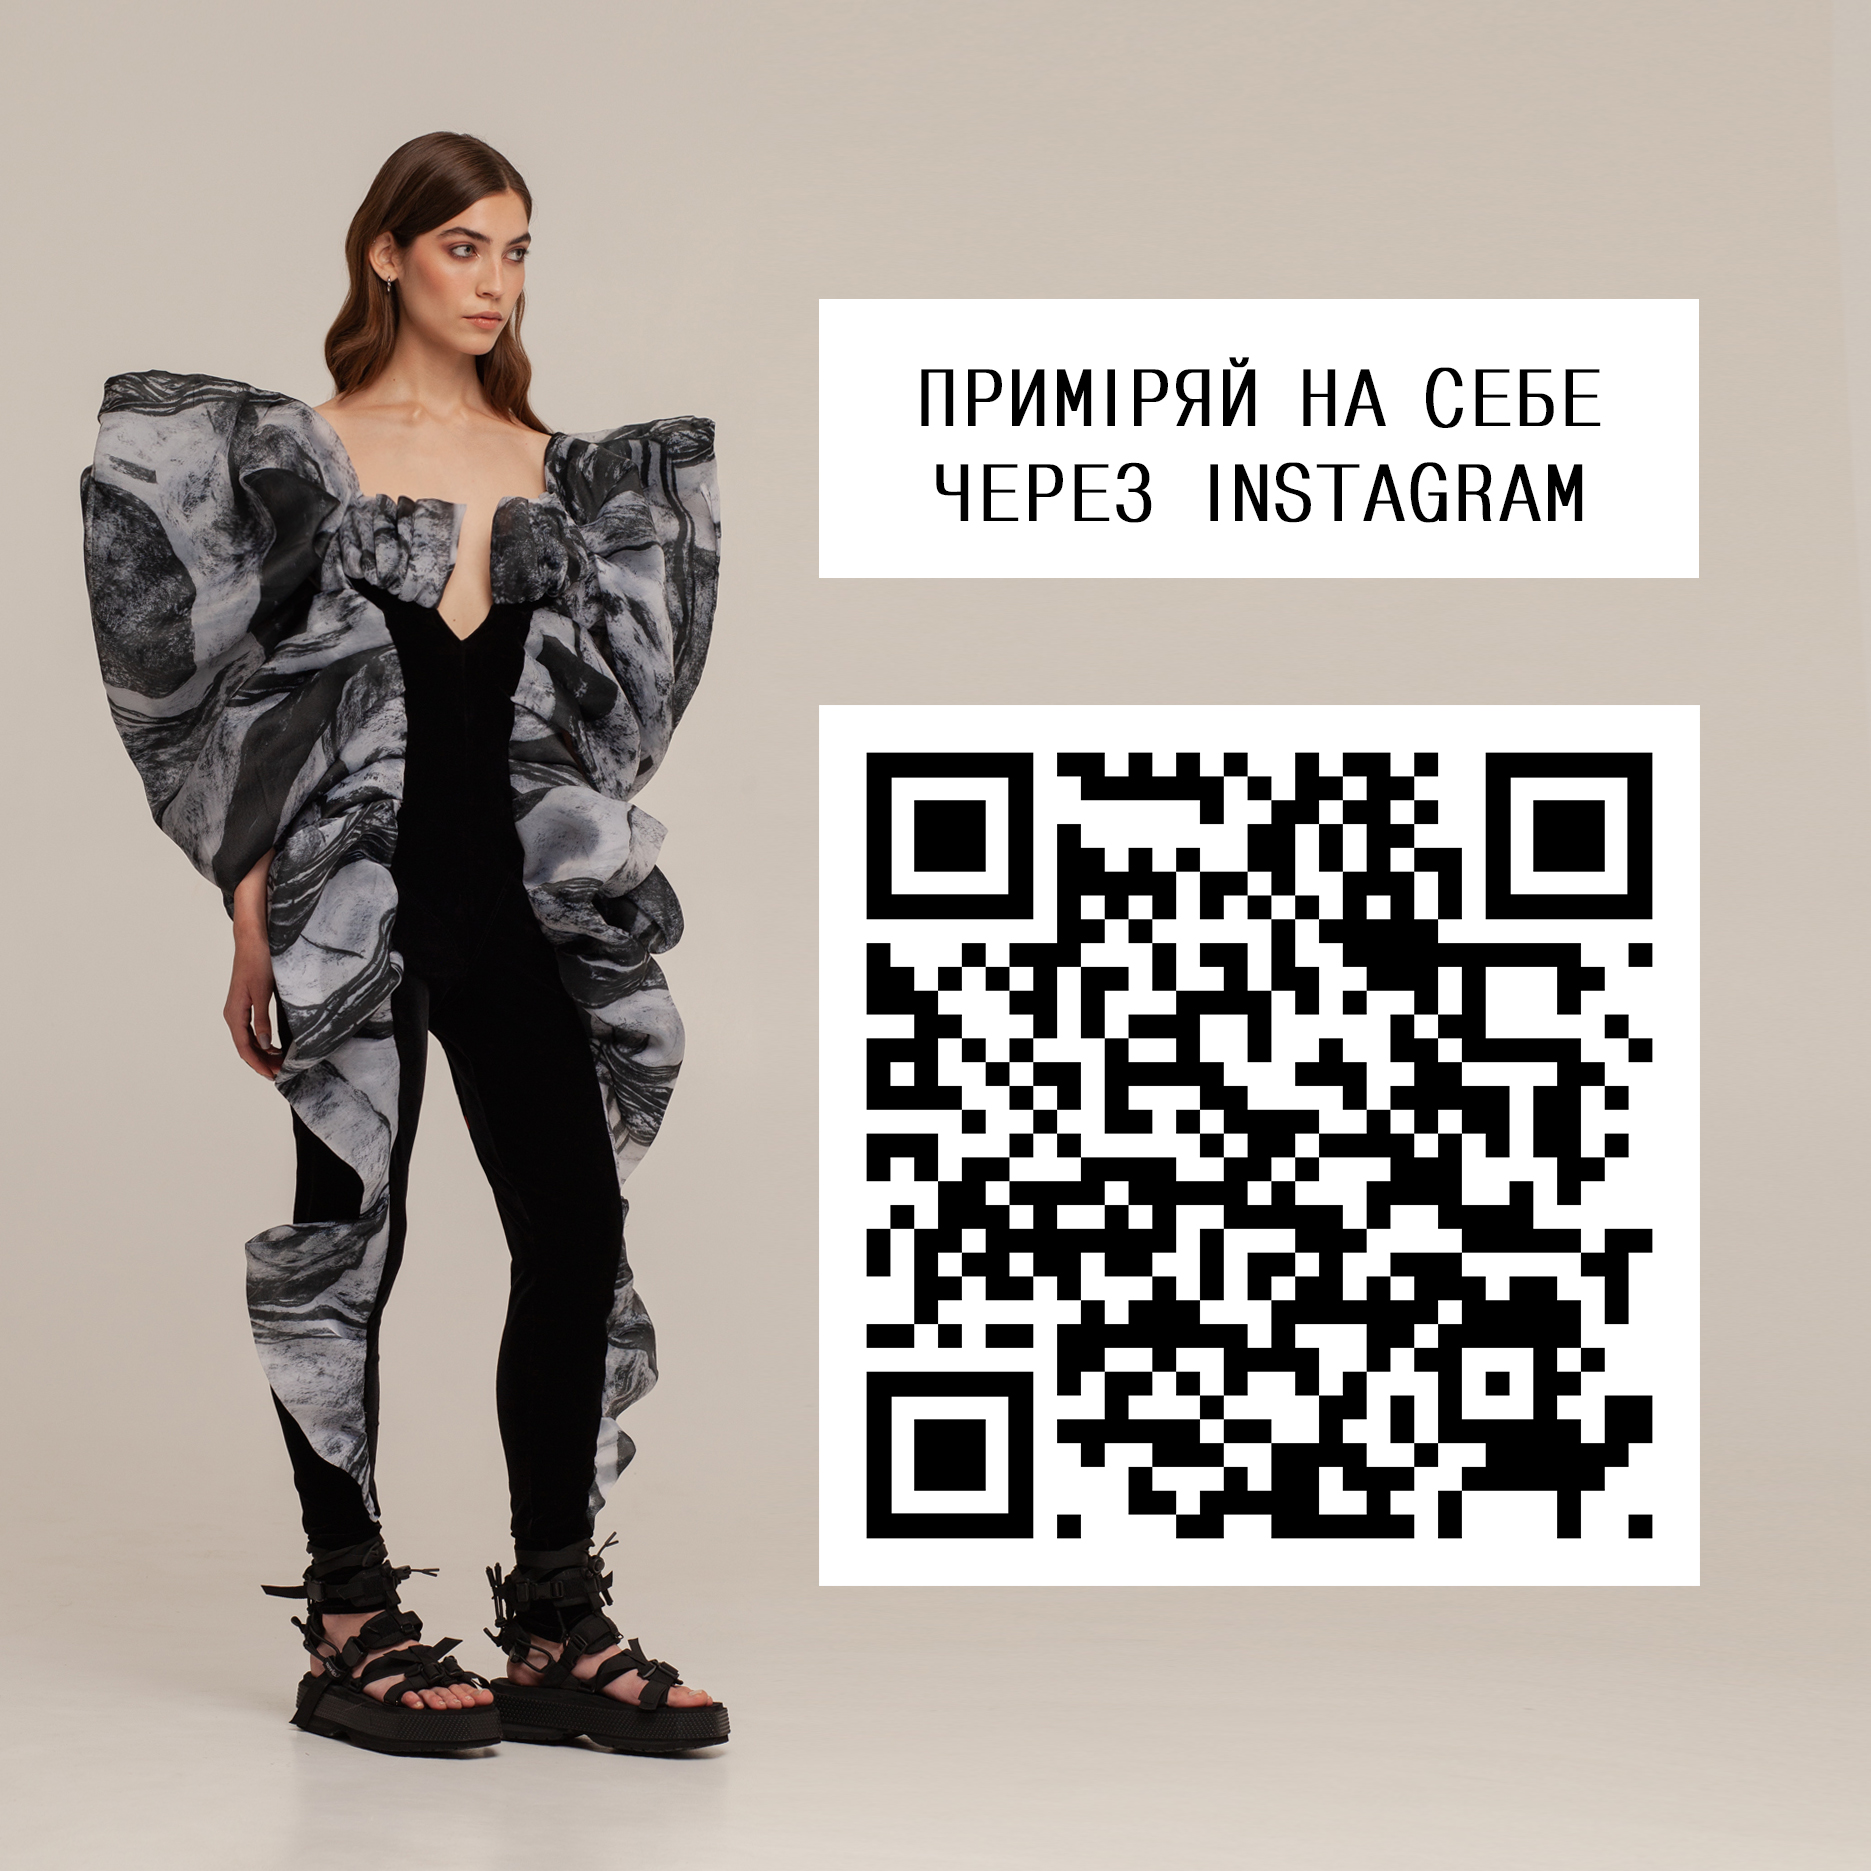 Boichuk AR look / Образ з принтом Поліни Бойчук